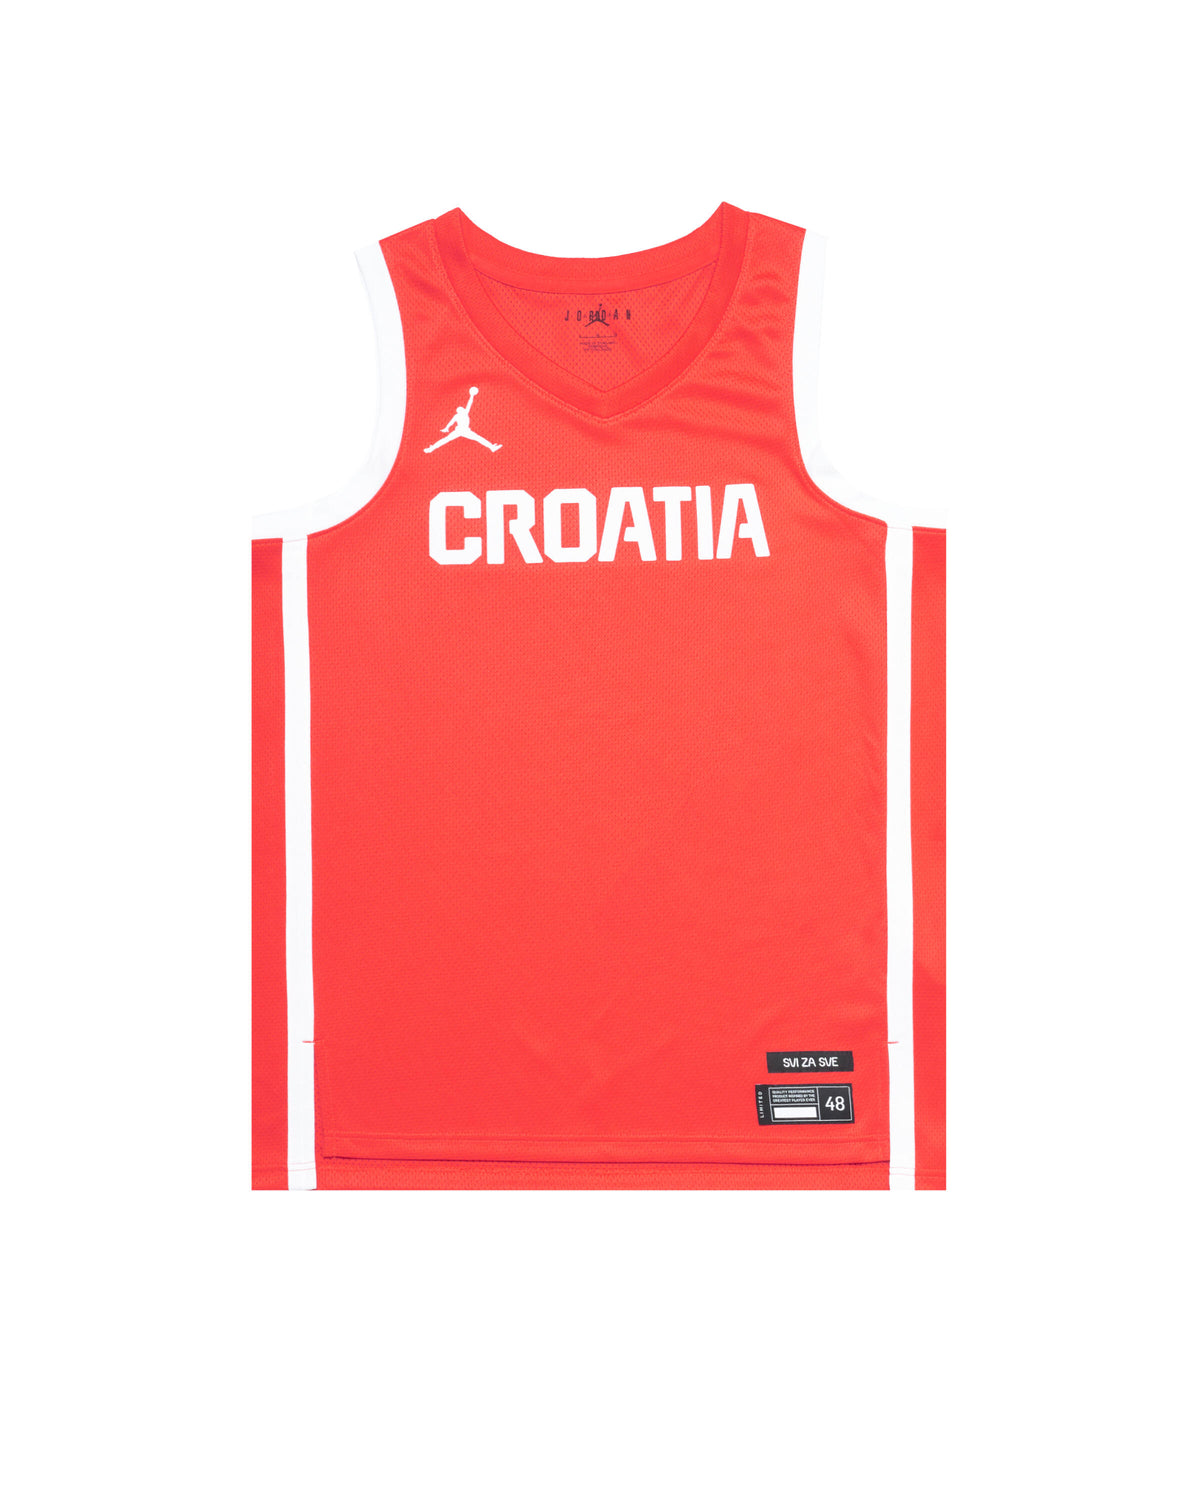 Nike CROATIA LIMITED JERSEY OLYMPIA 24